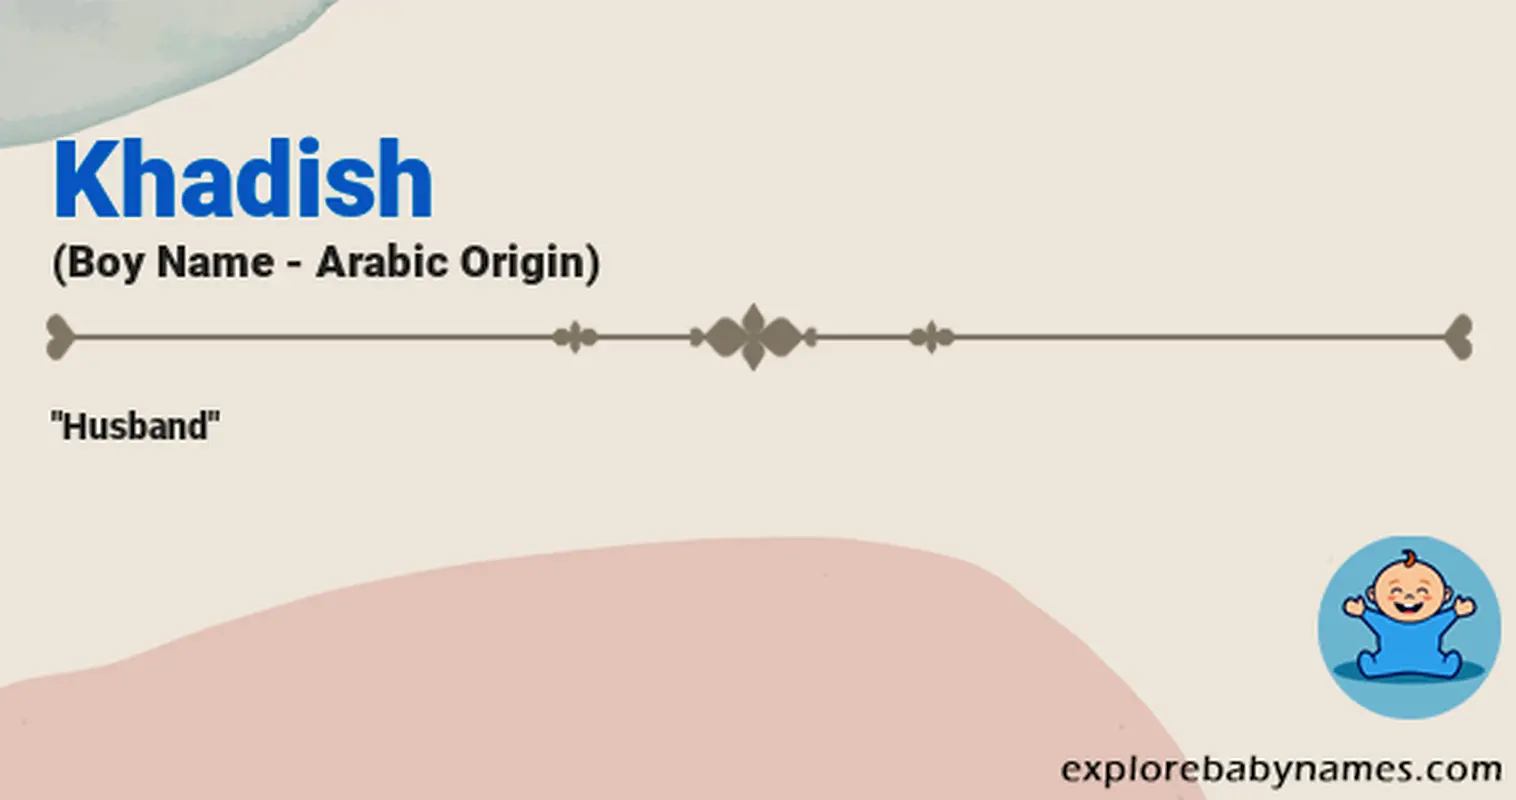 Meaning of Khadish